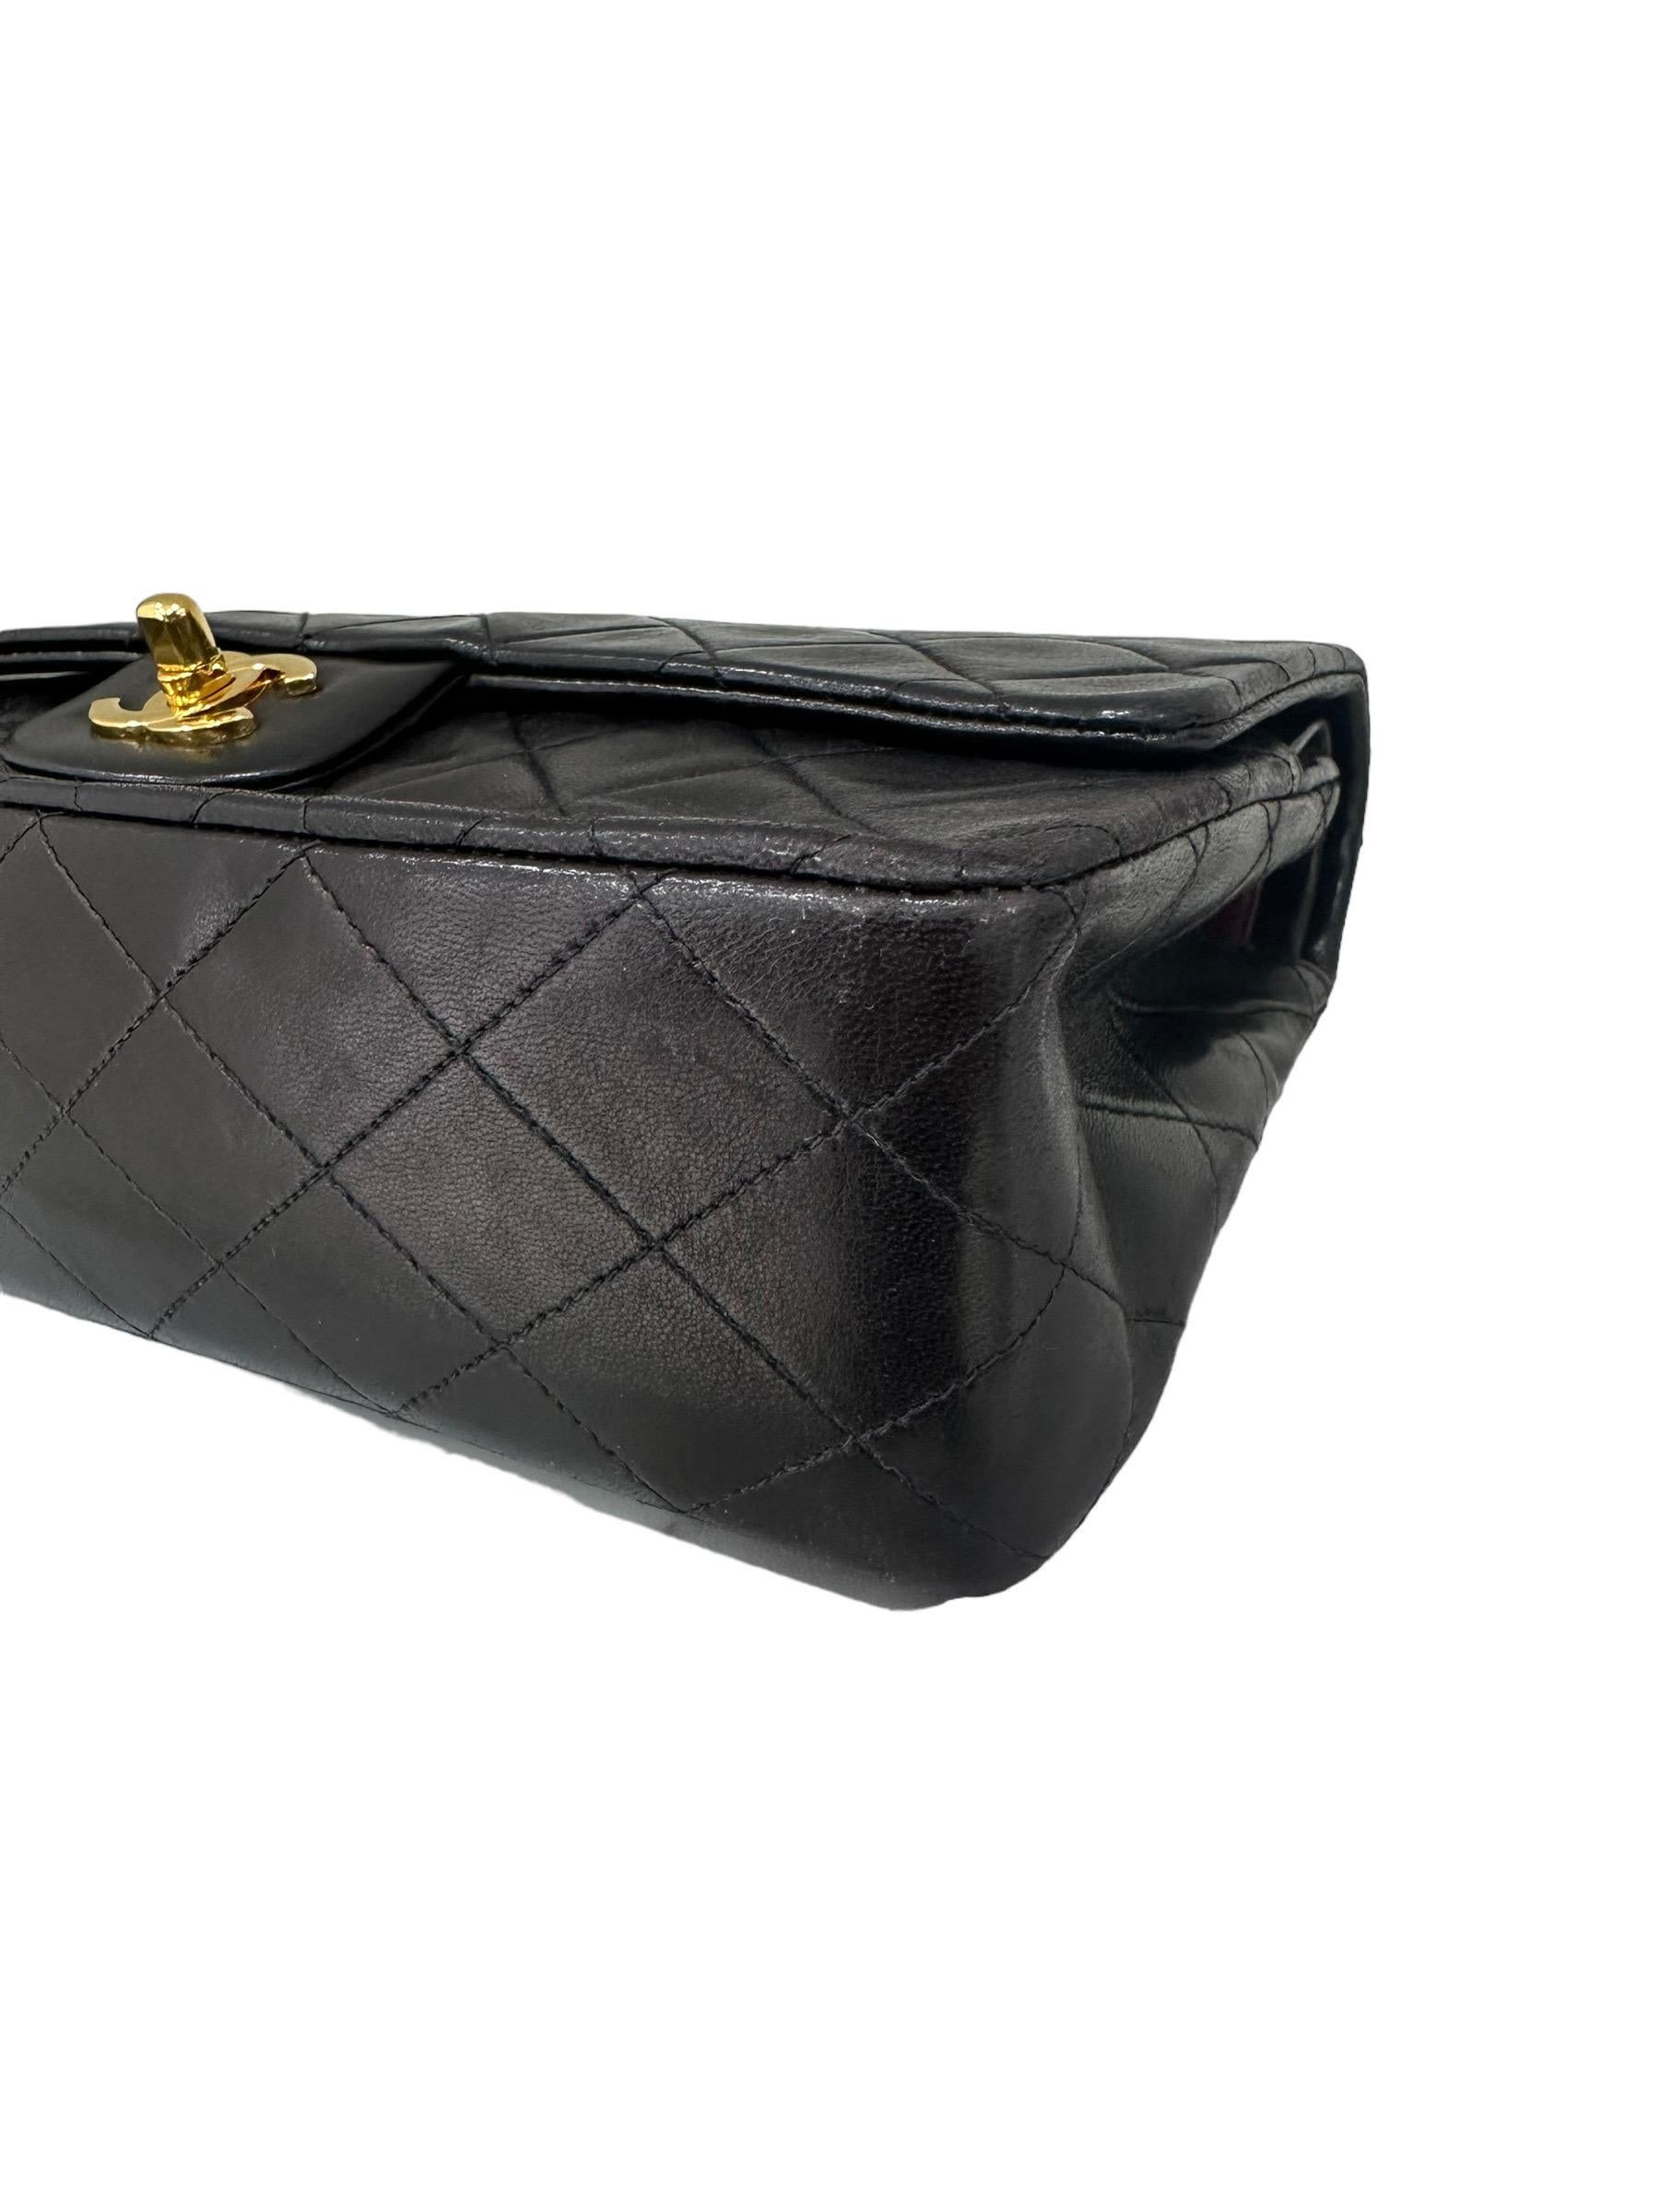 1996 Chanel Timeless Classic 2.55 Black Leather Top Shoulder Bag For Sale 8